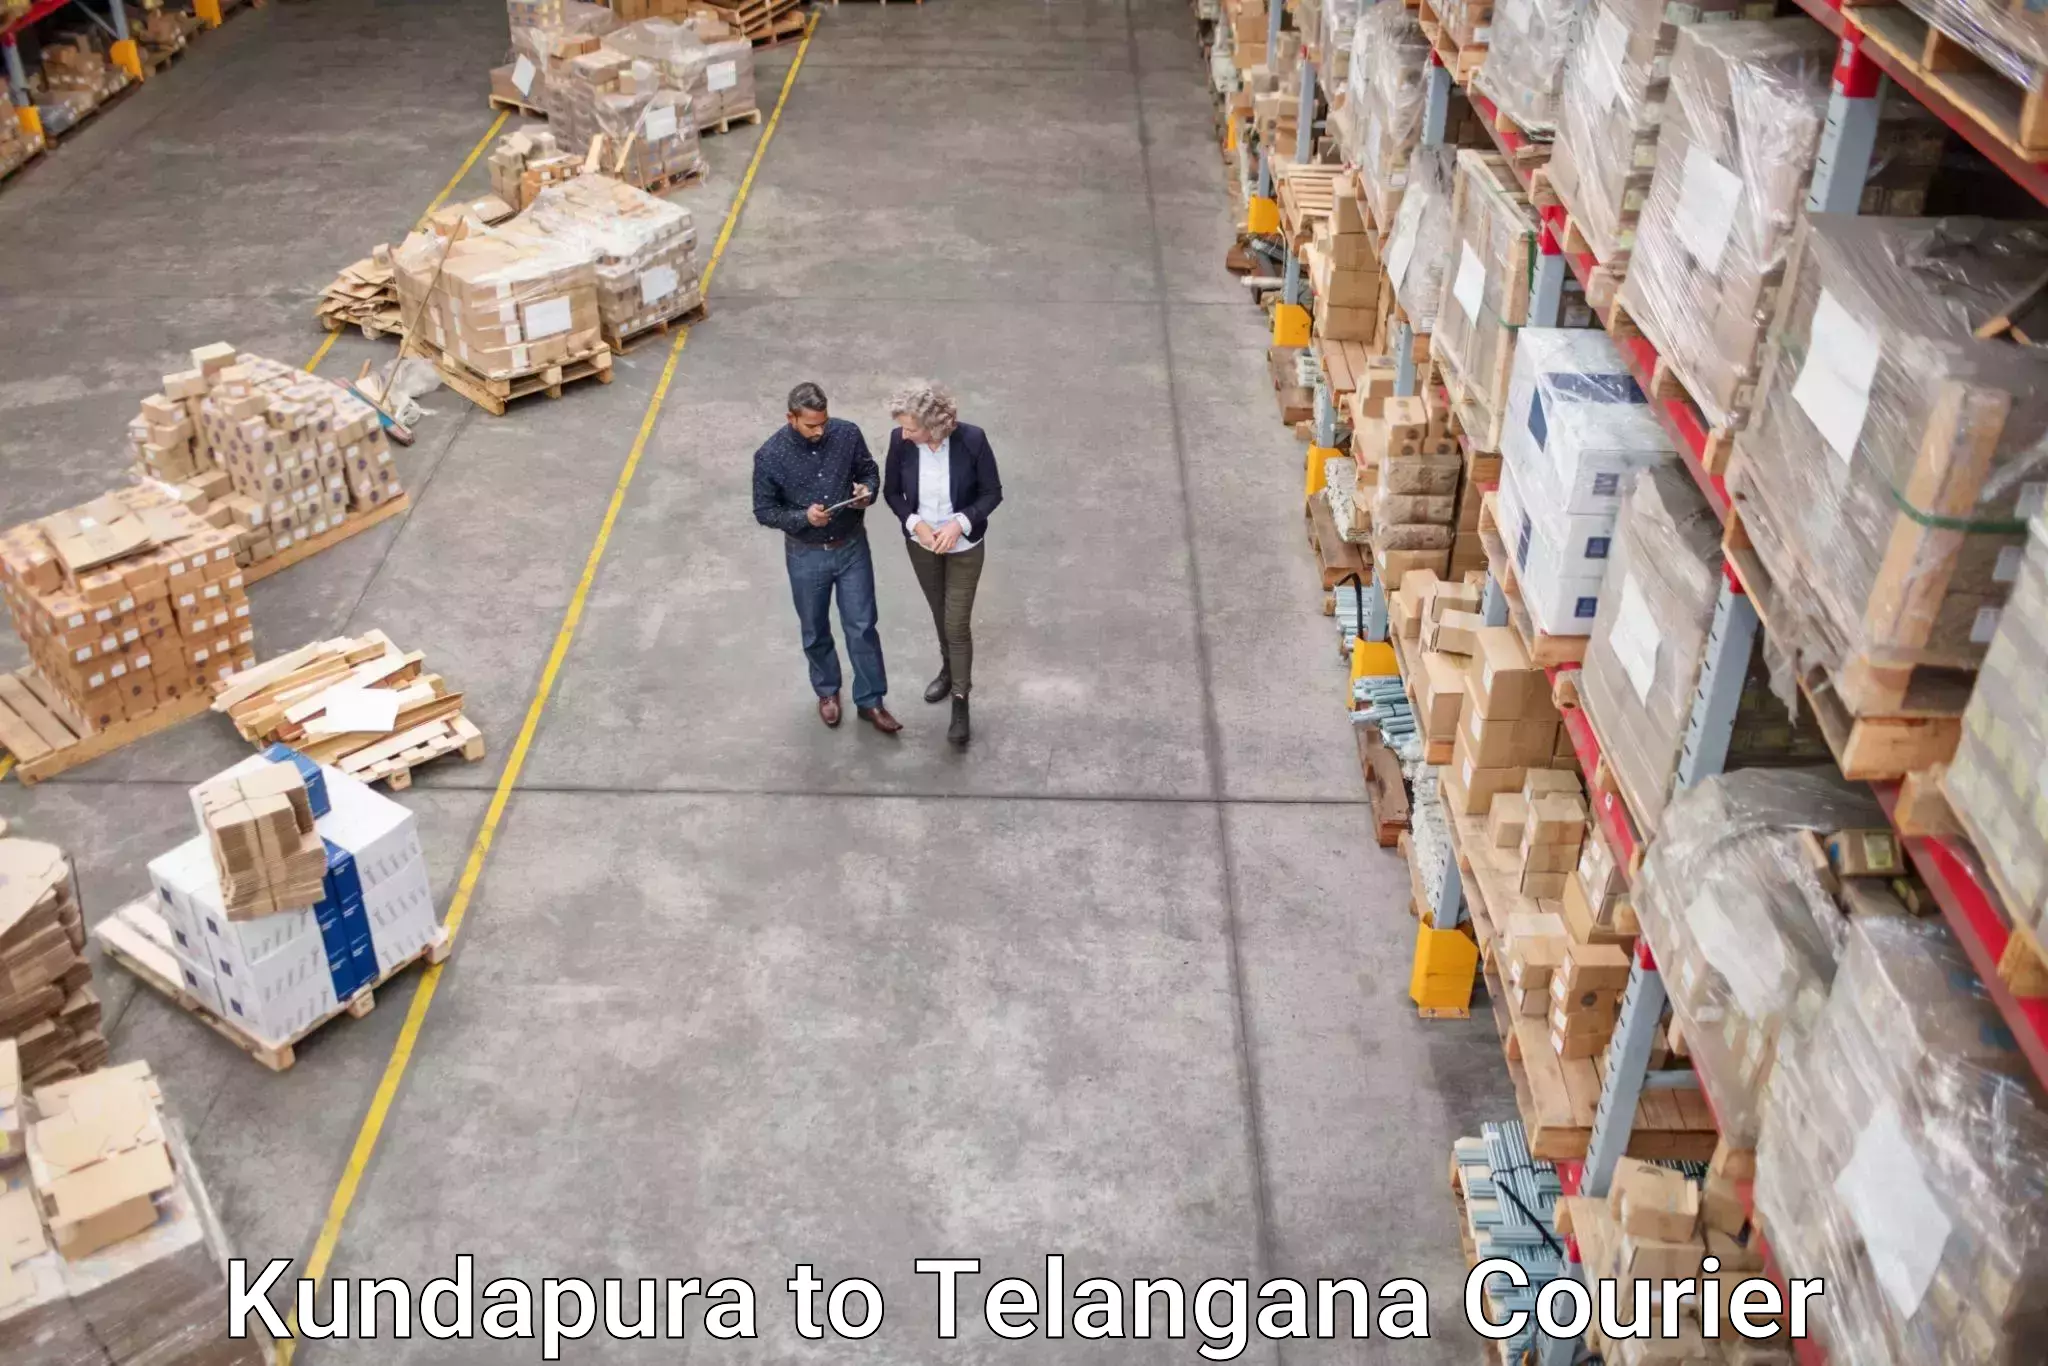 Reliable parcel services Kundapura to Gangadhara